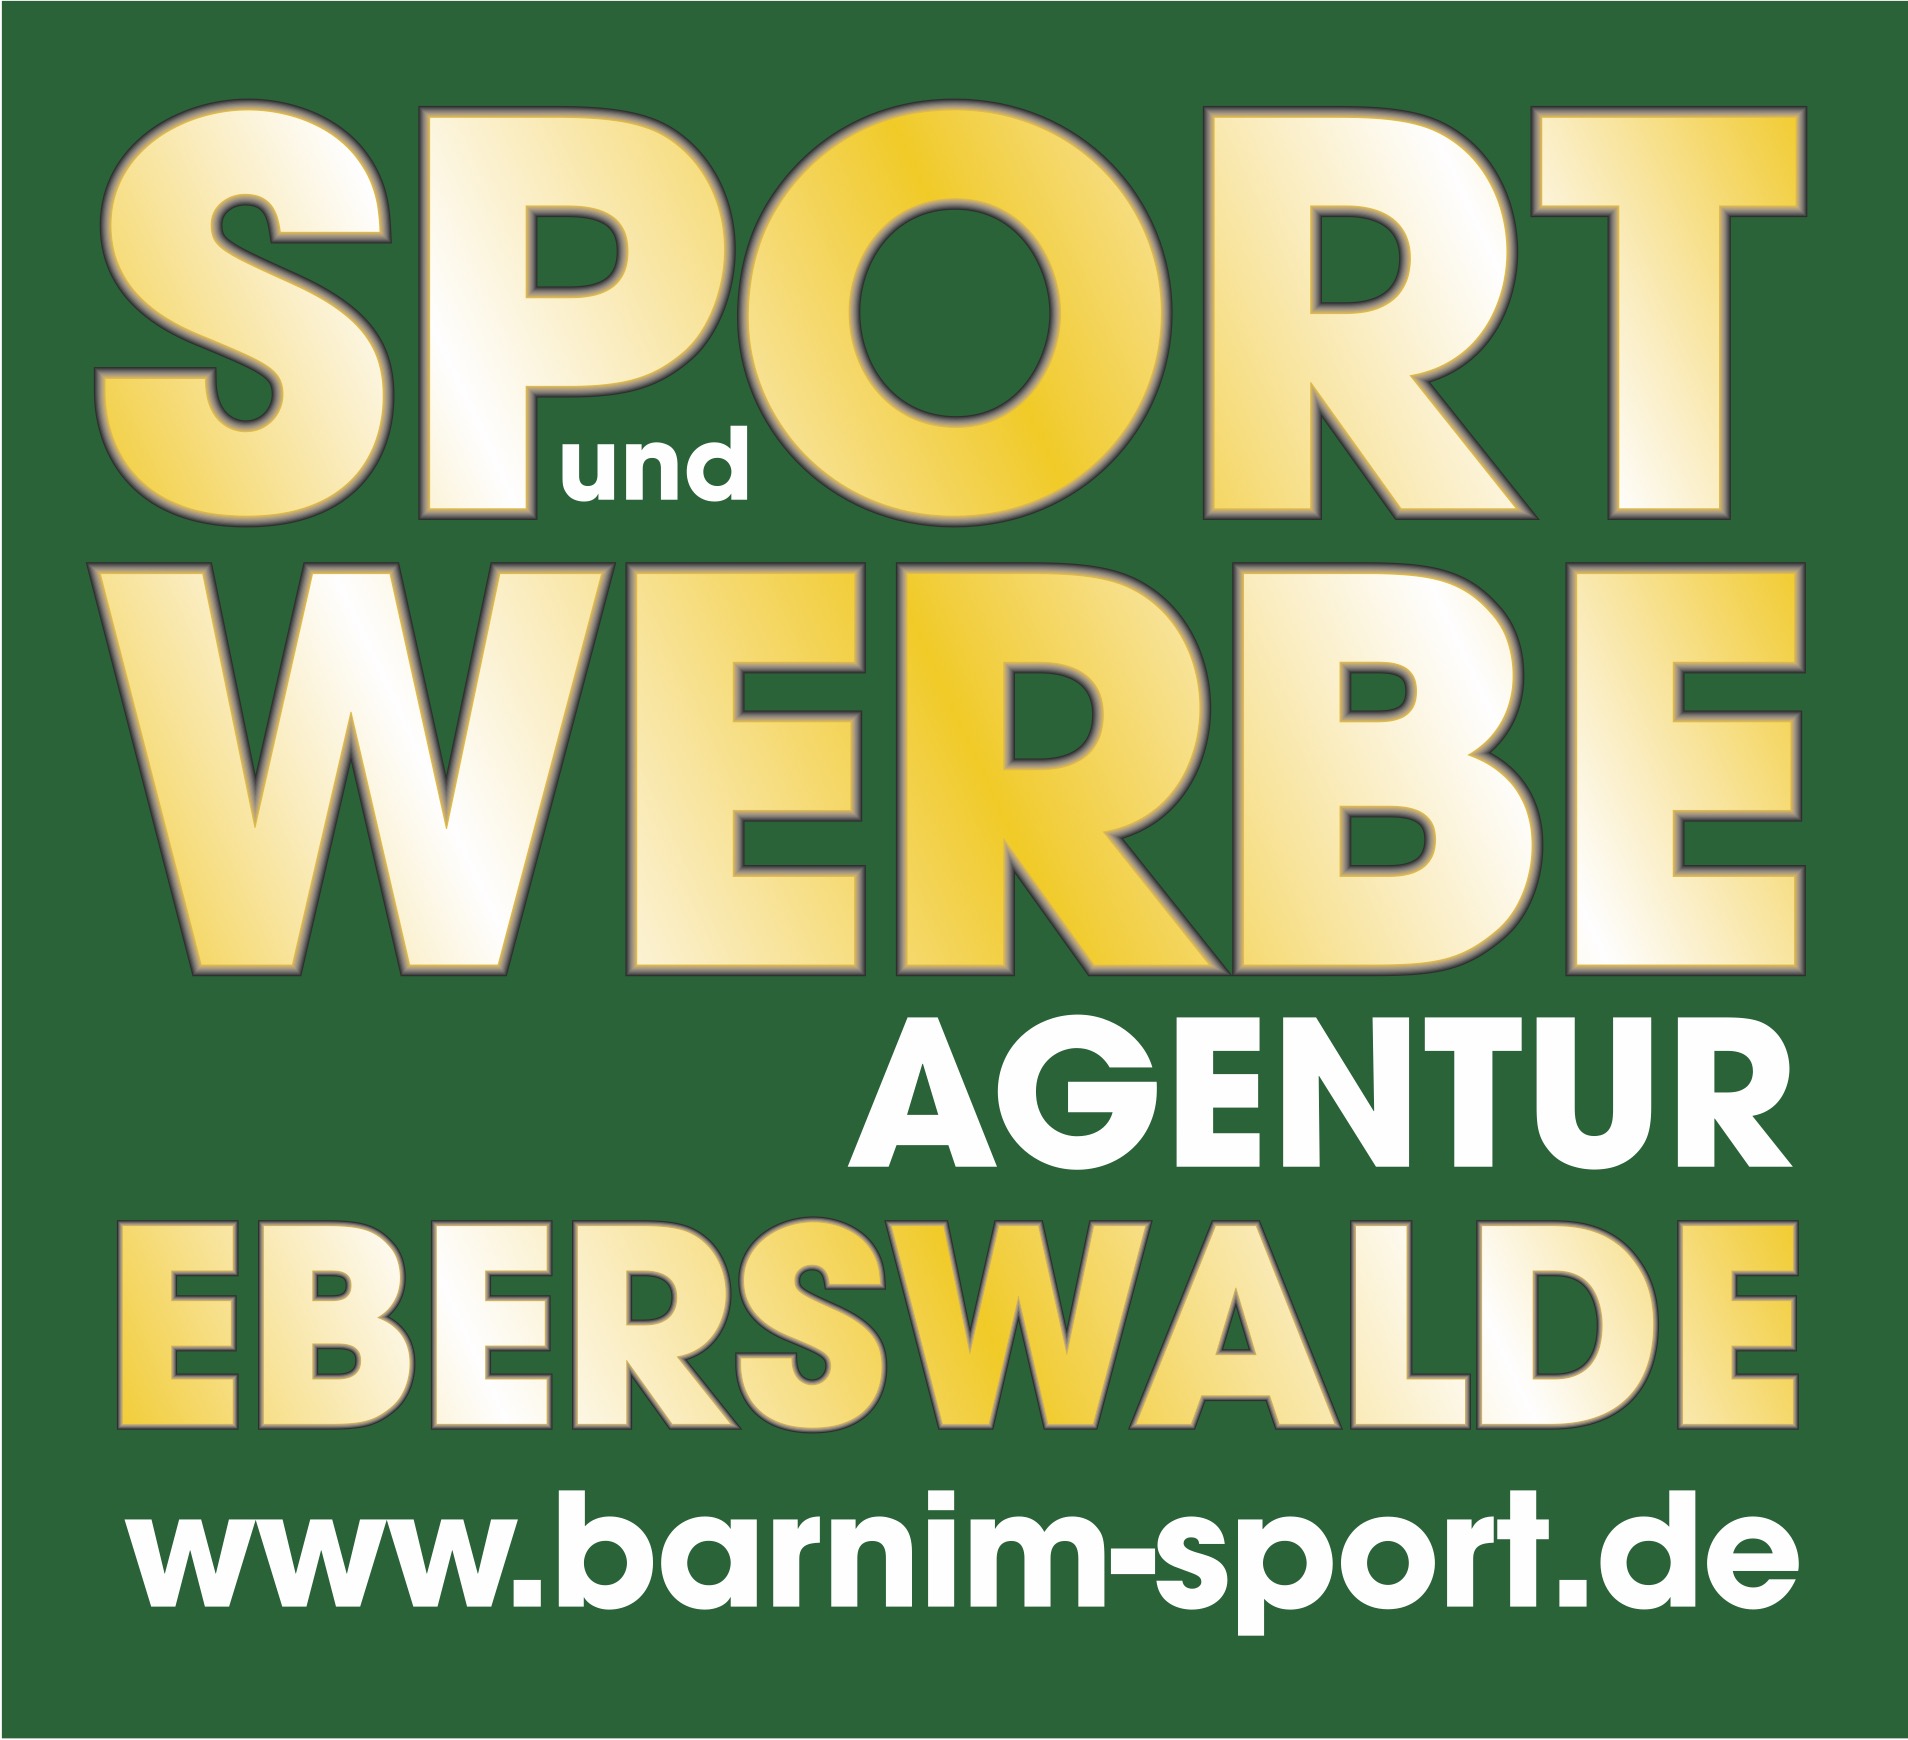 (c) Barnimsport.de